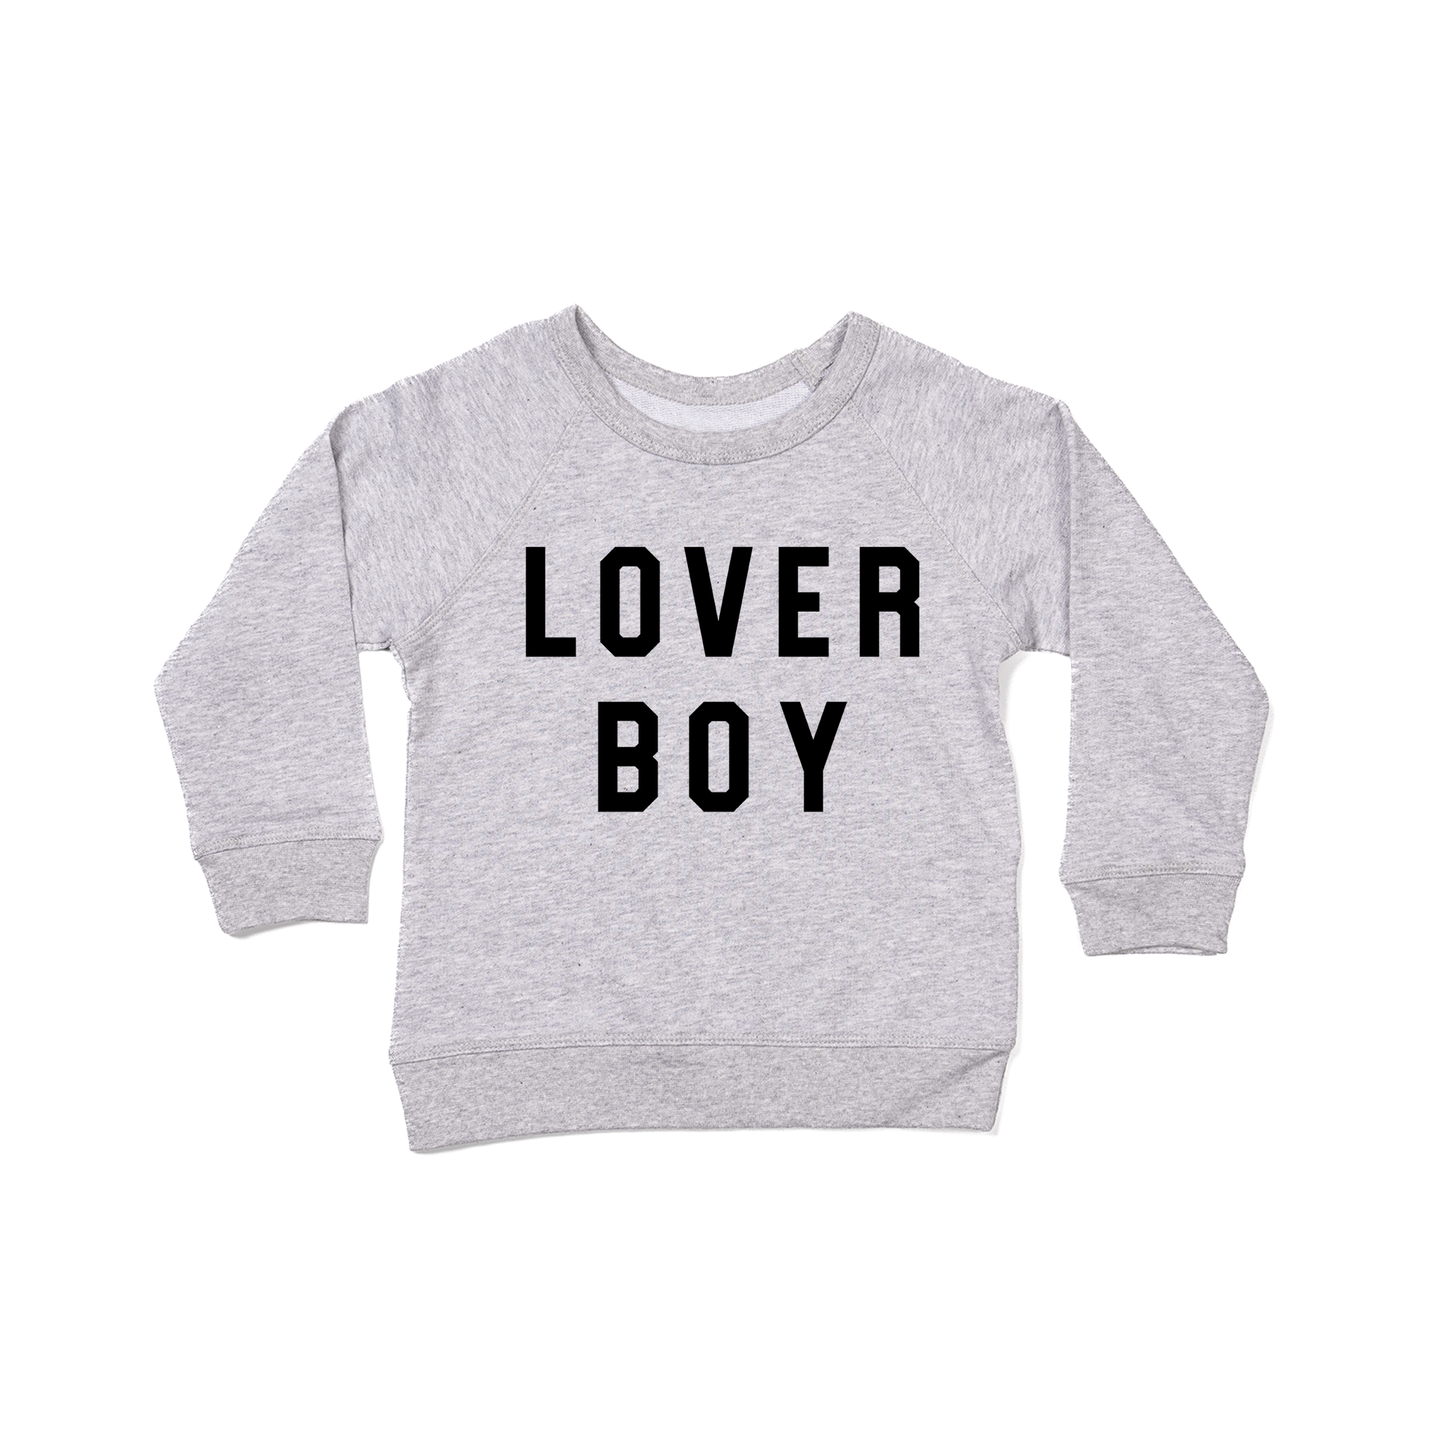 Lover Boy (Black) - Kids Sweatshirt (Heather Gray)